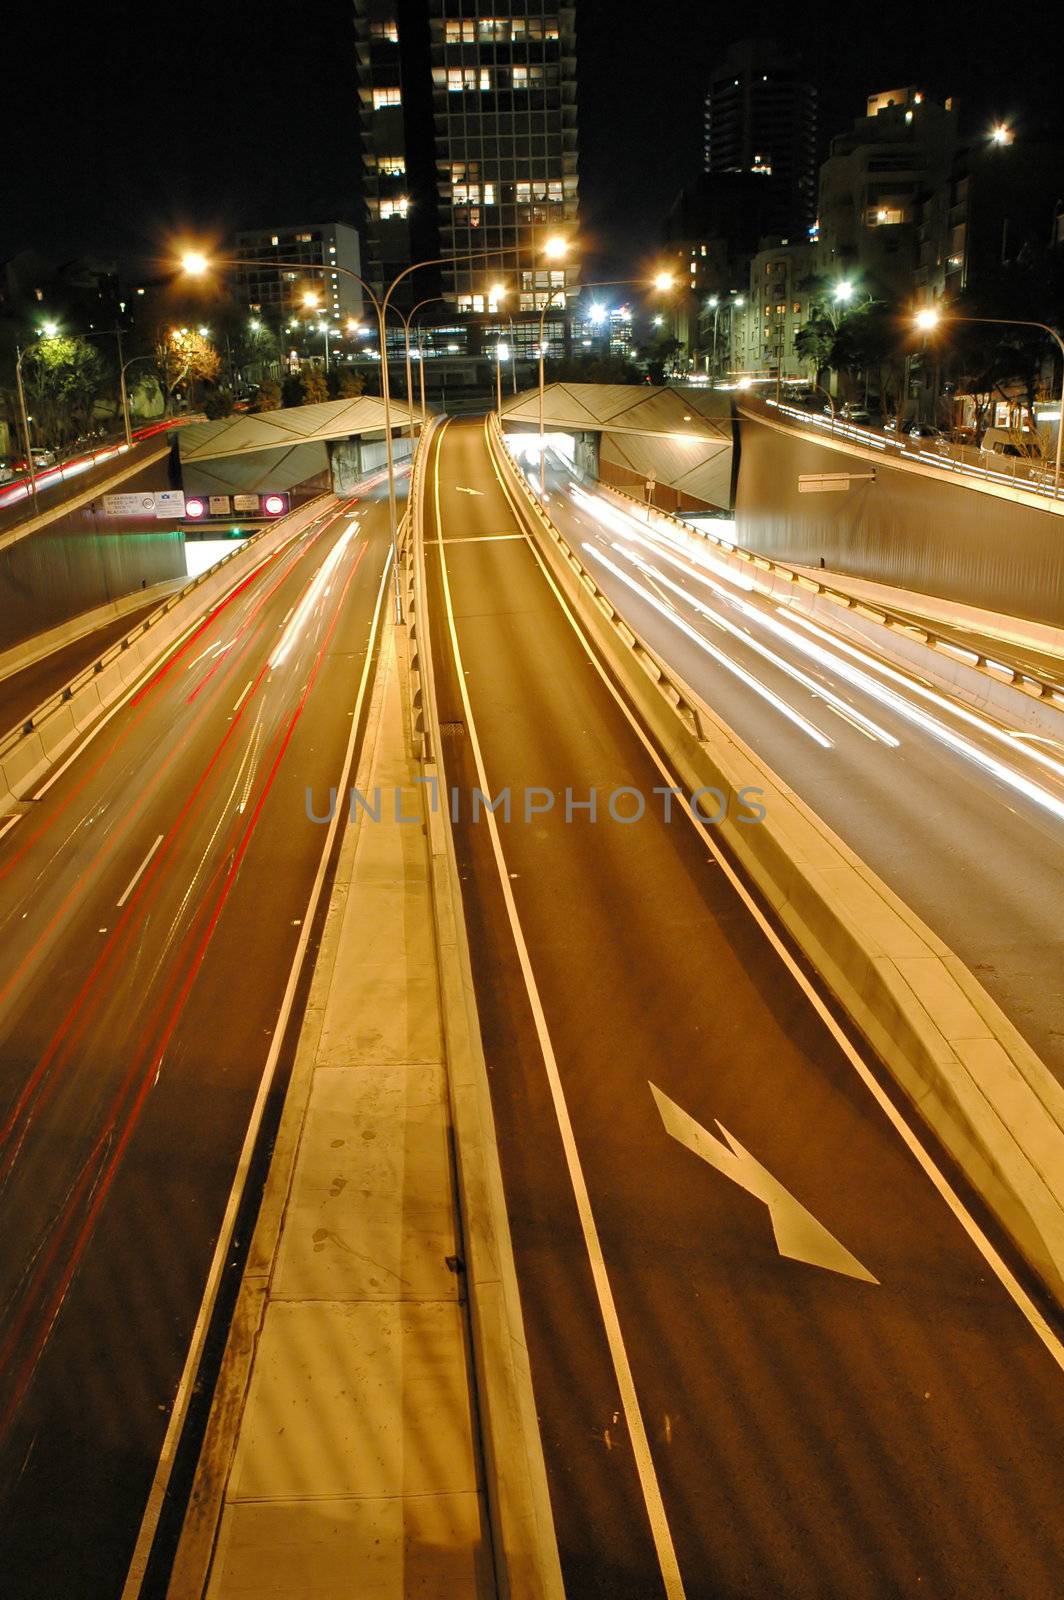 night tunnel traffic in sydney, blurred headlight trails, buildings in distance, 